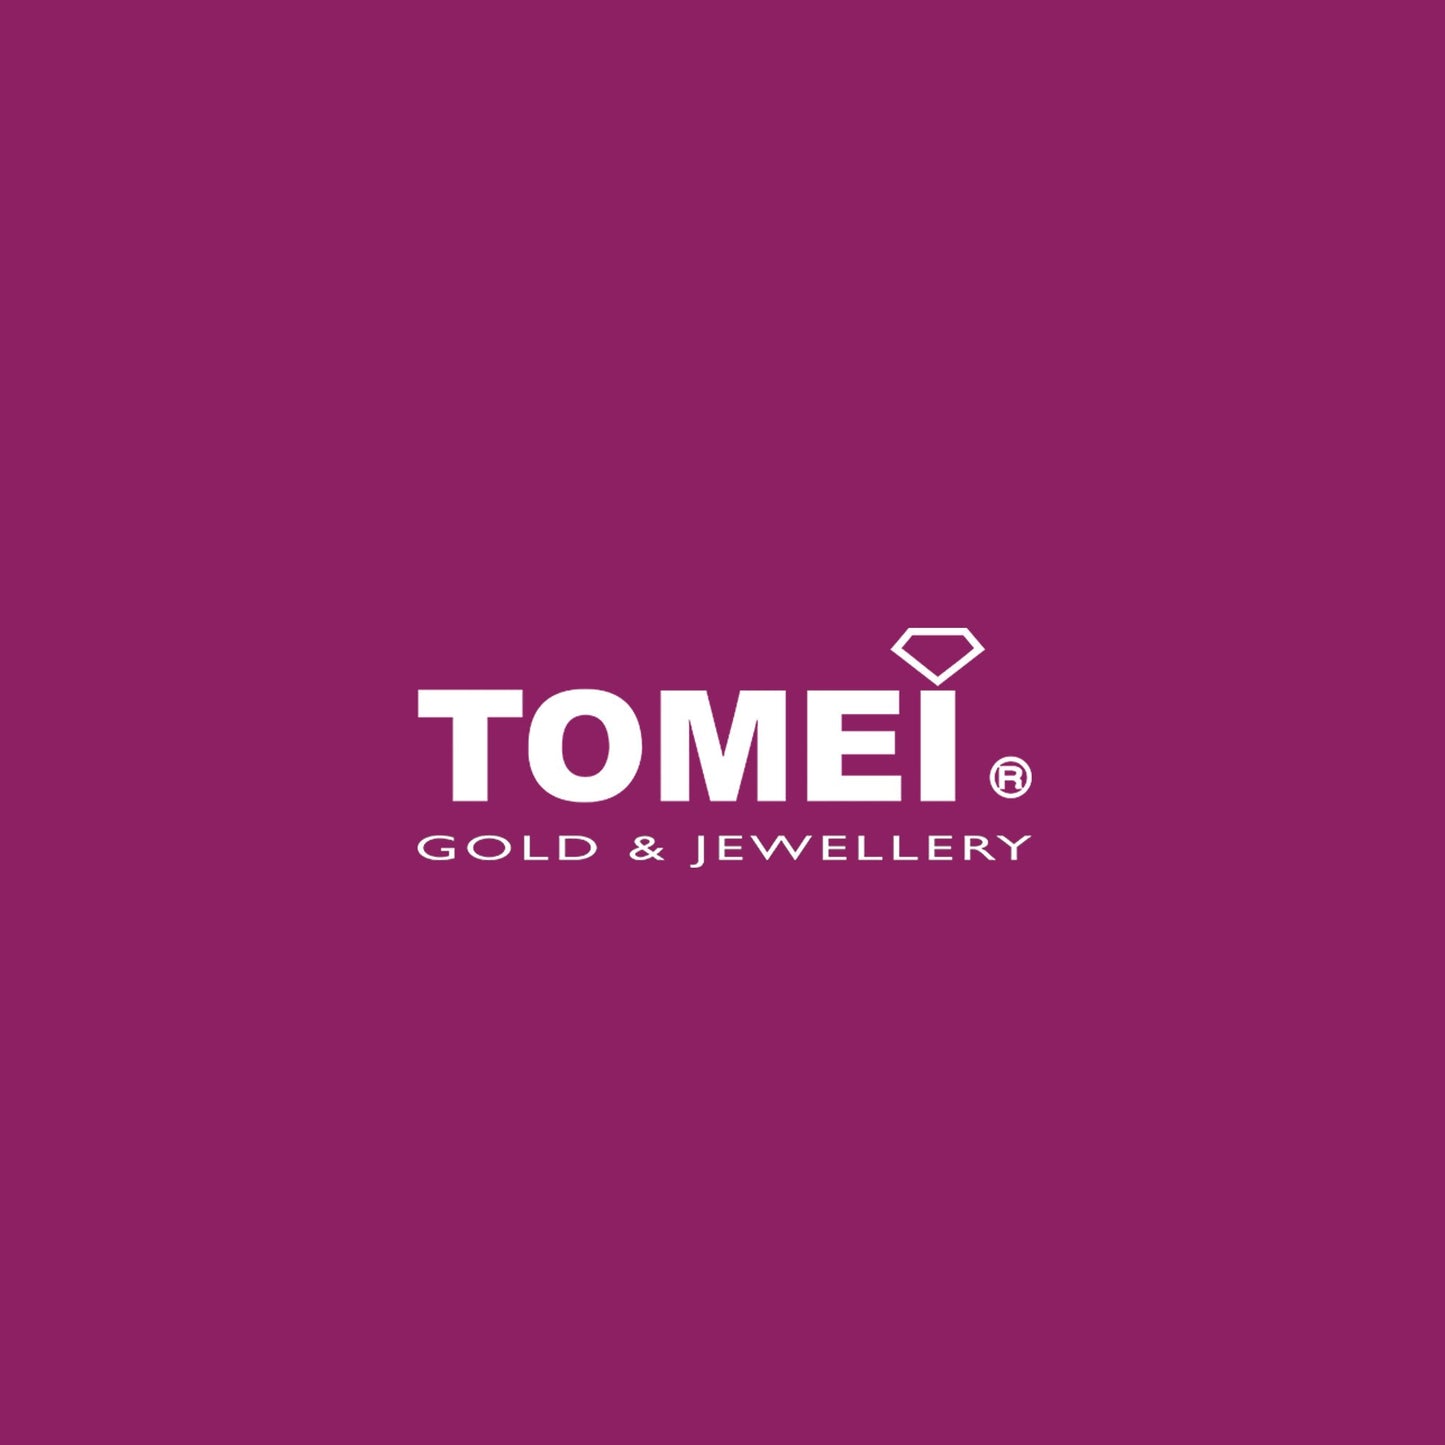 TOMEI Long Bar Cable Bracelet, Rose Gold 585